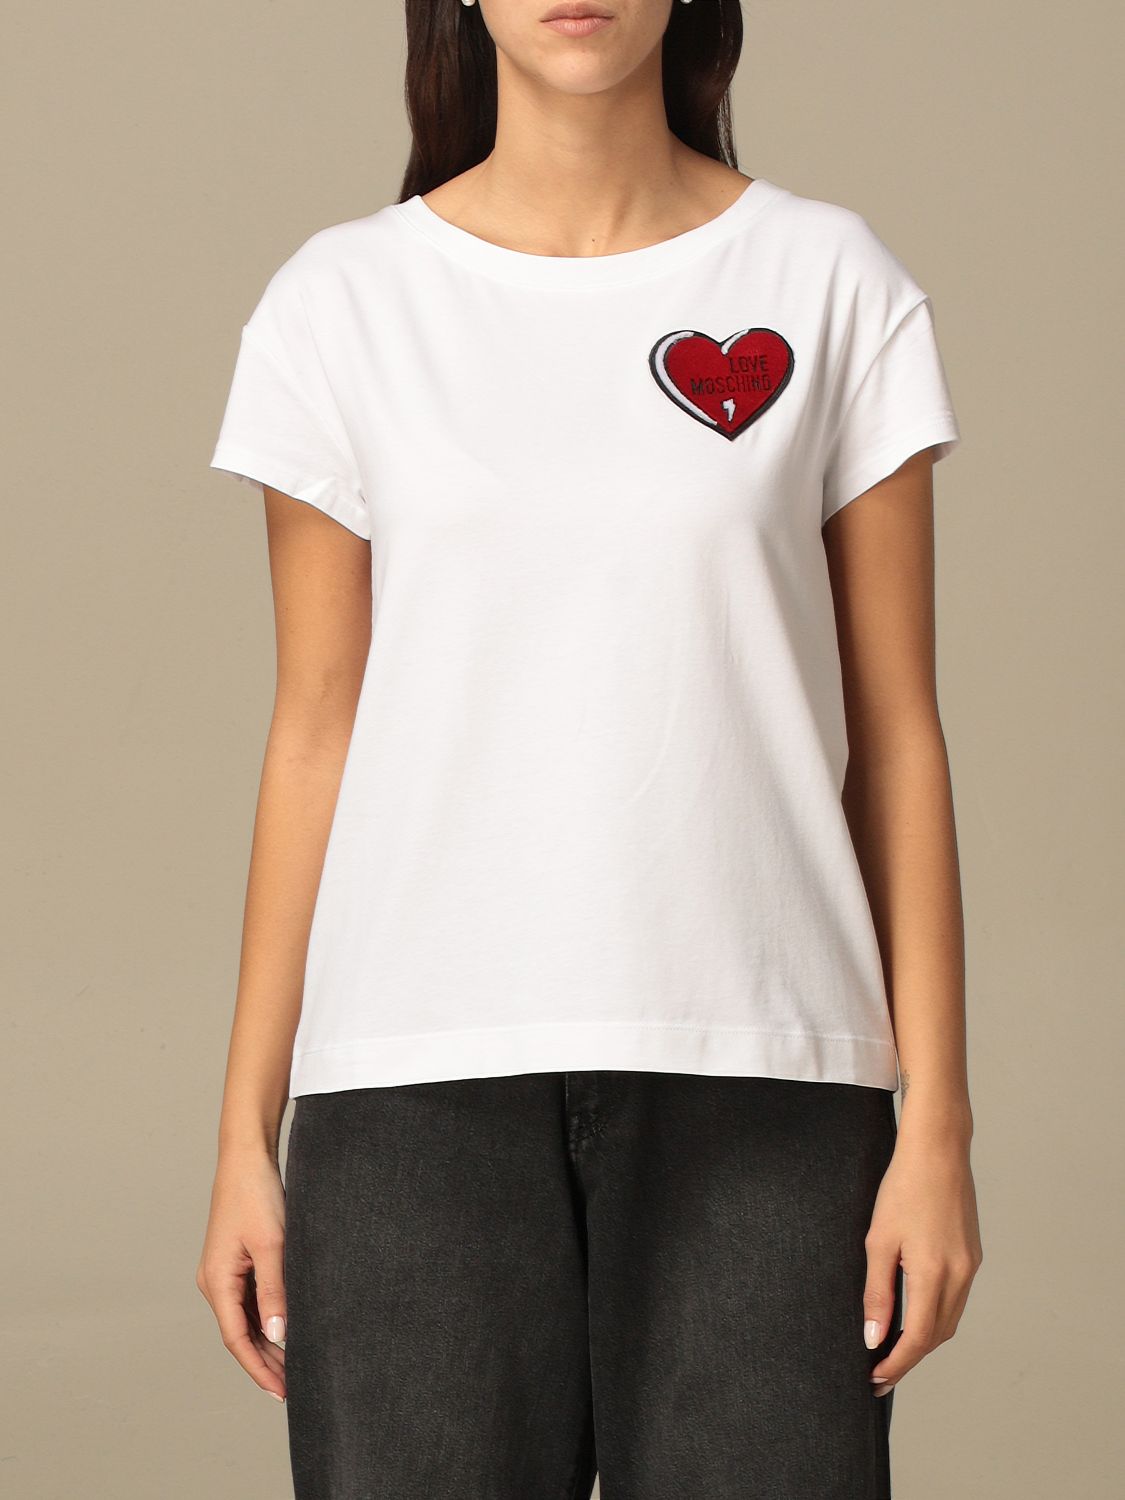 moschino shirt with heart